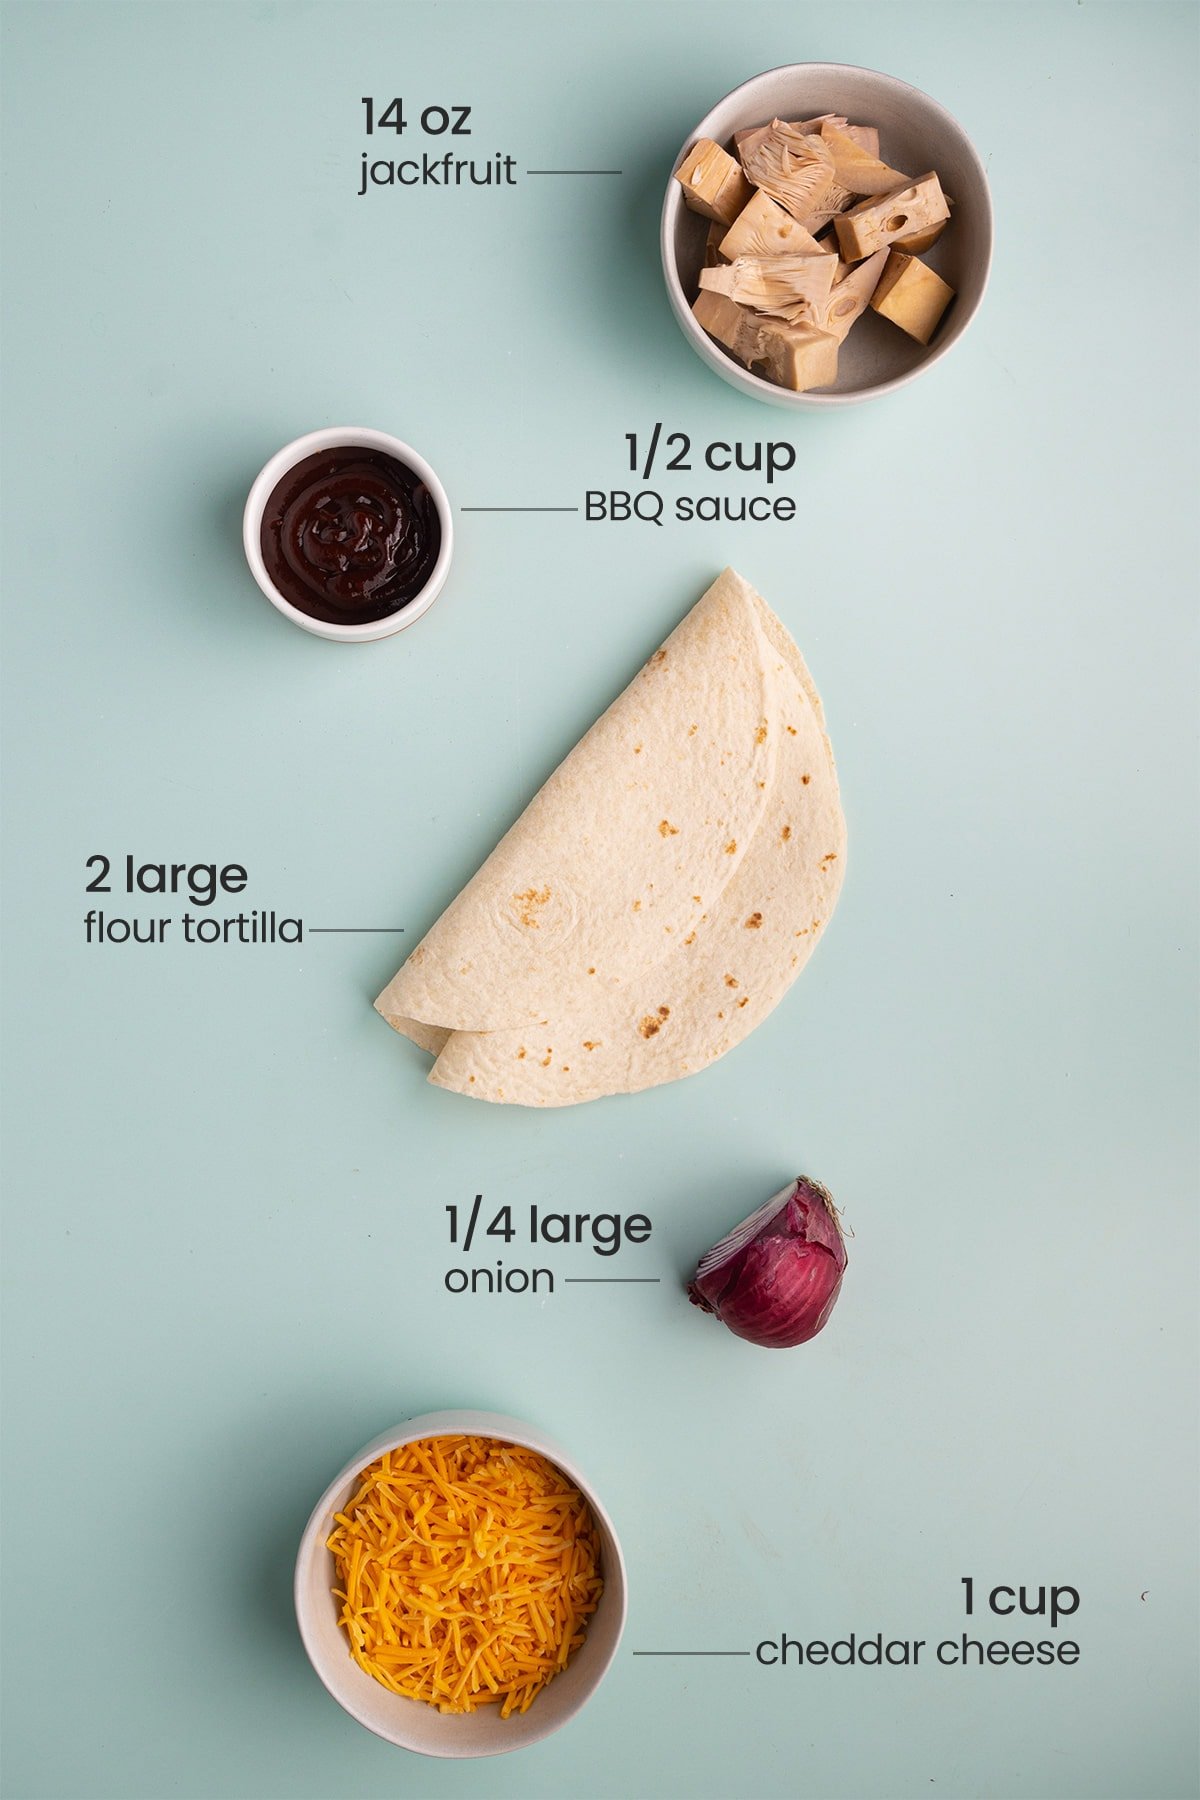 Ingredients for BBQ Jackfruit Quesadillas - jackfruit, BBQ sauce, flour tortilla, onion, cheddar cheese